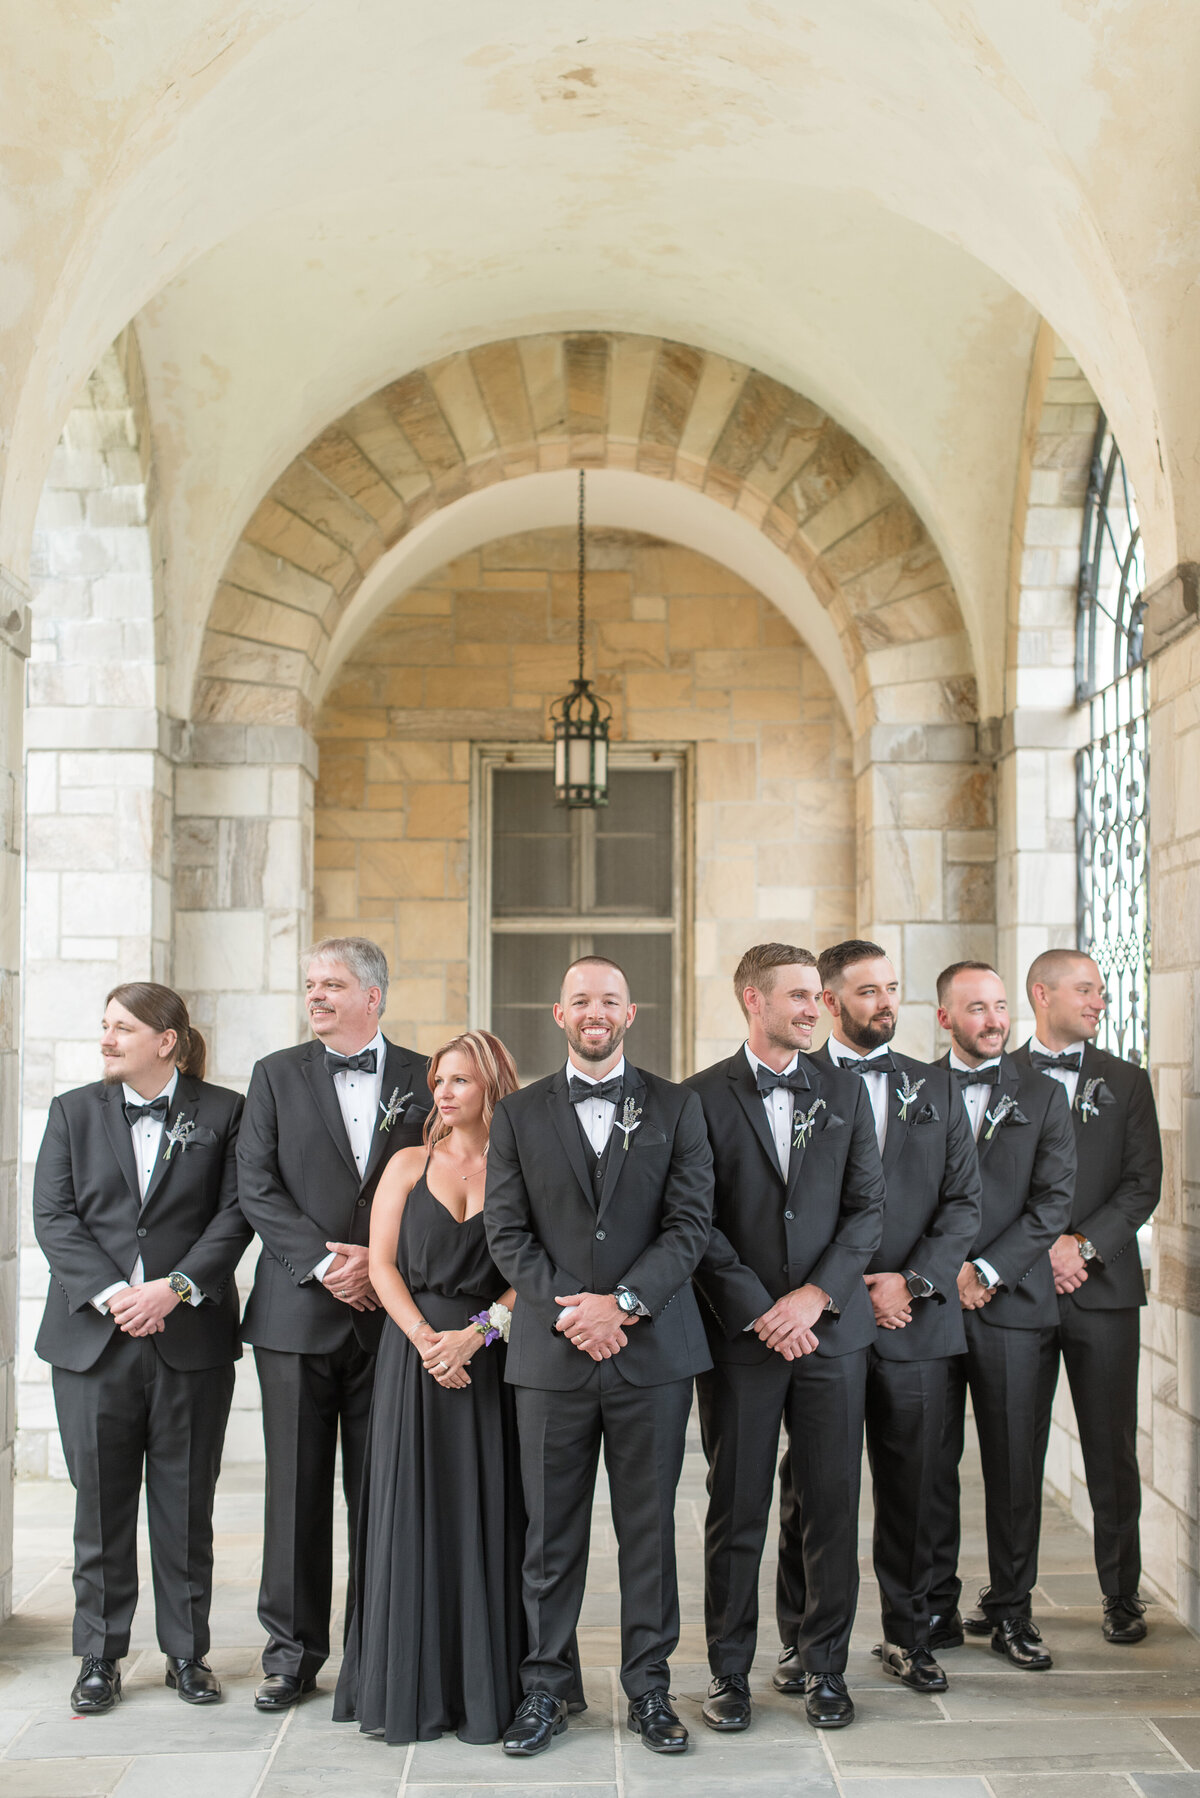 Groomsmen in black suits standing in vaulted stone hall